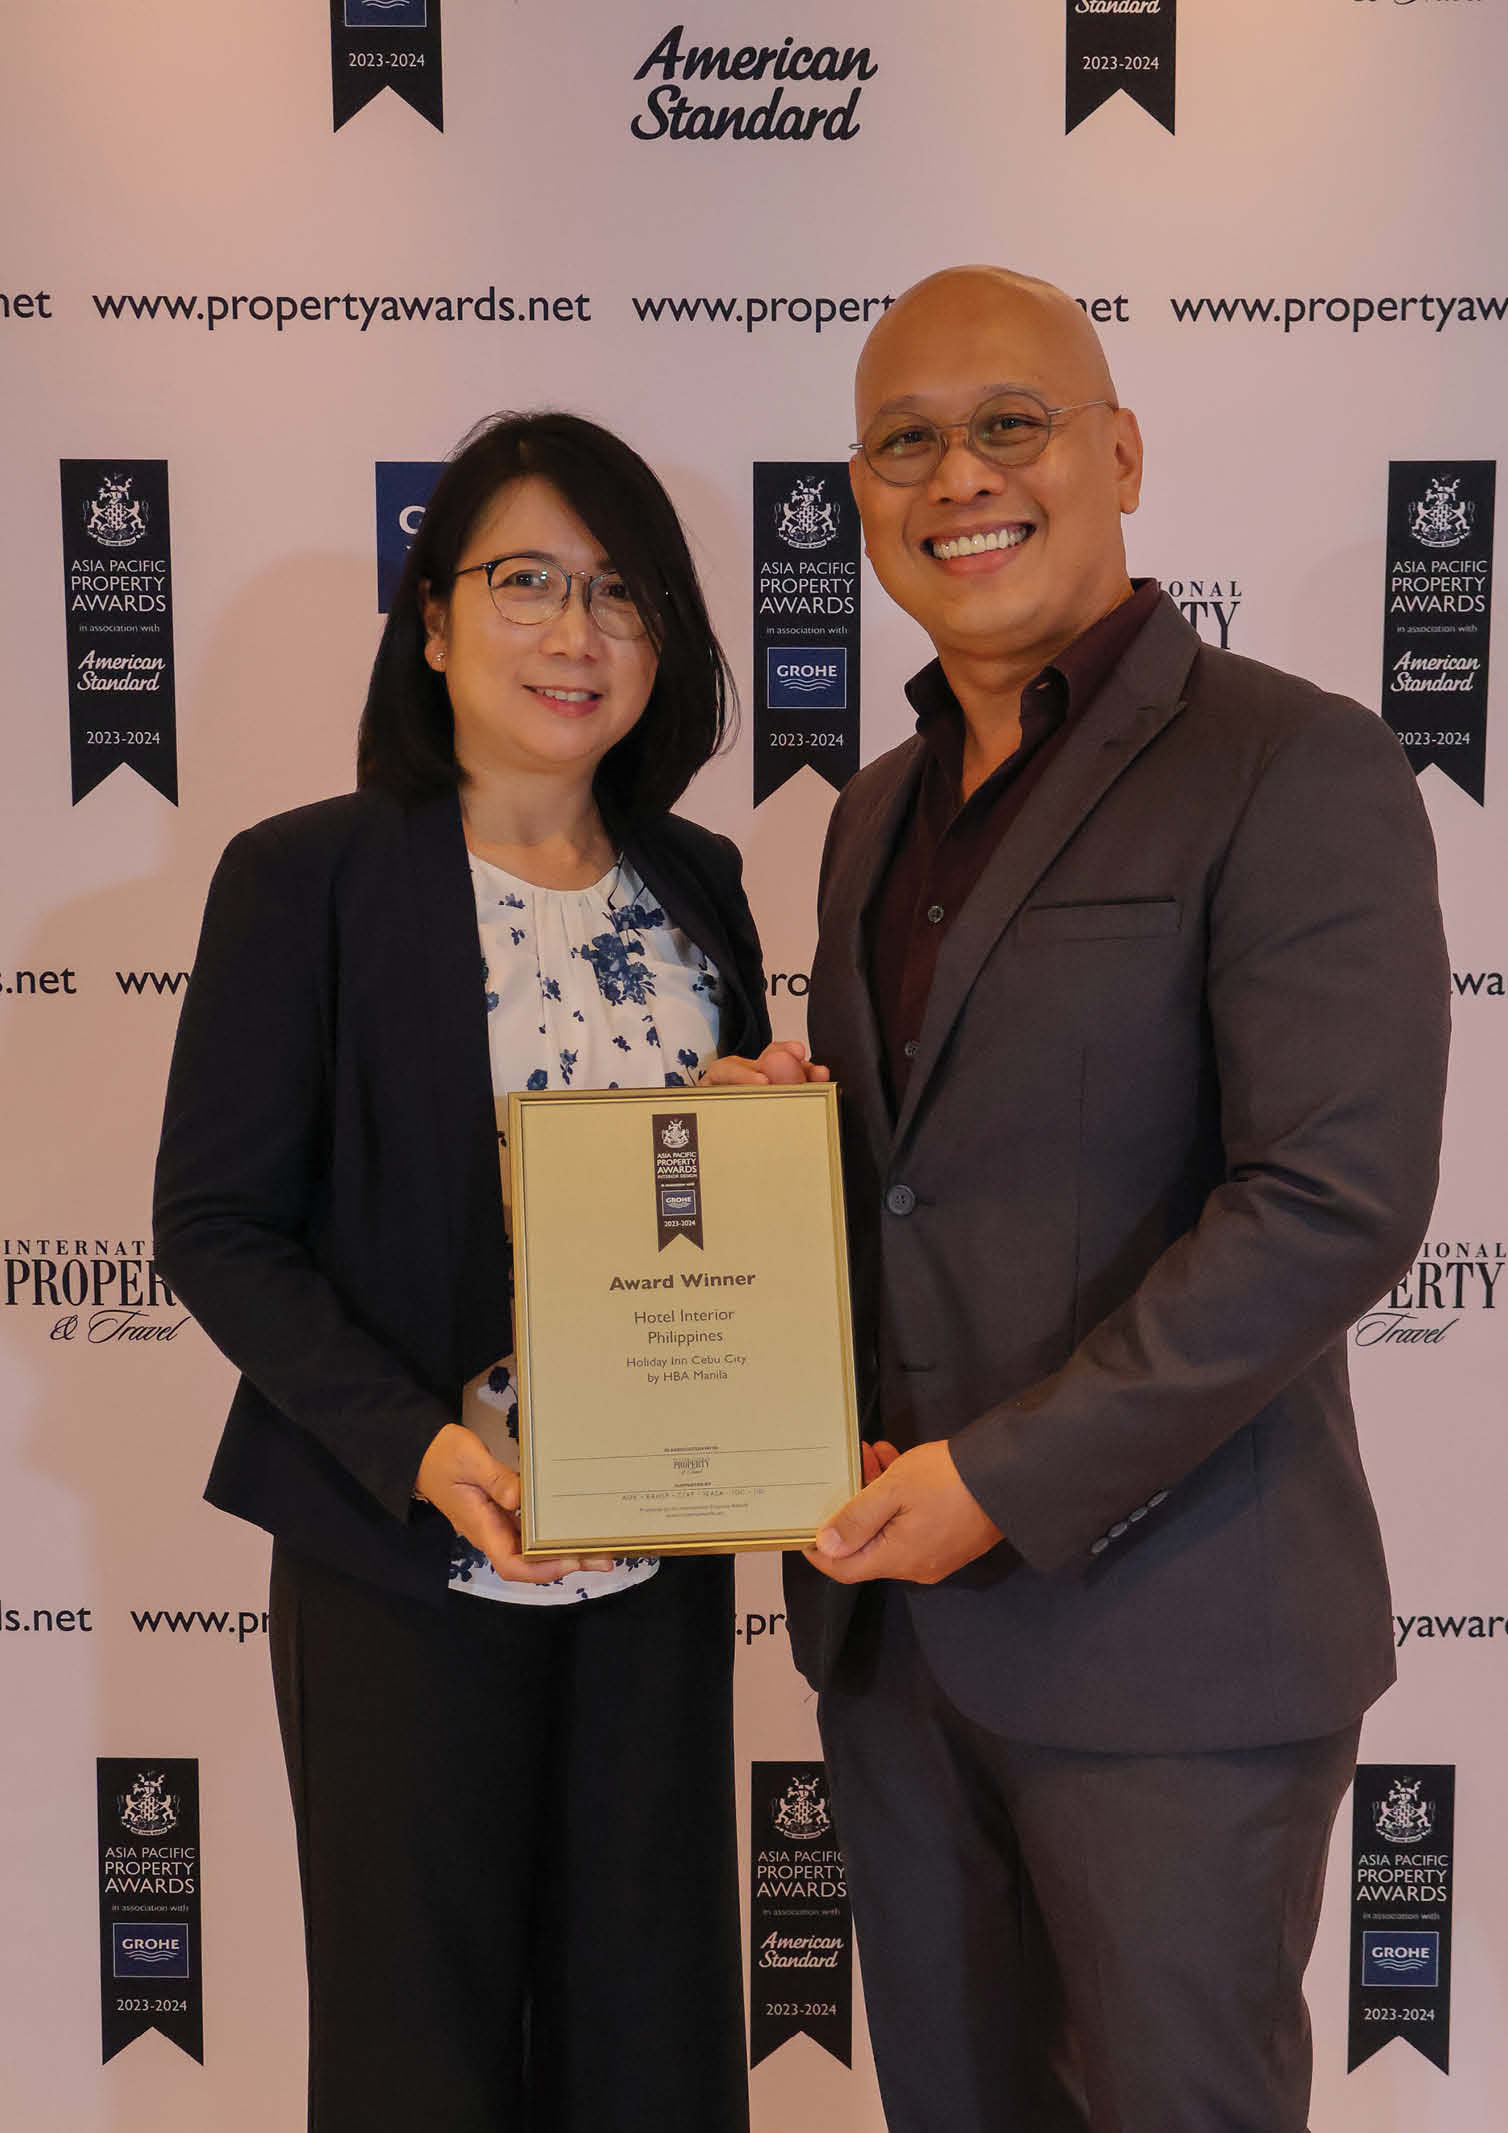 Award Winner
Hotel Interior Philippines
Holiday Inn Cebu City by HBA Manila
L-R: Architects Gina and Norman Agleron